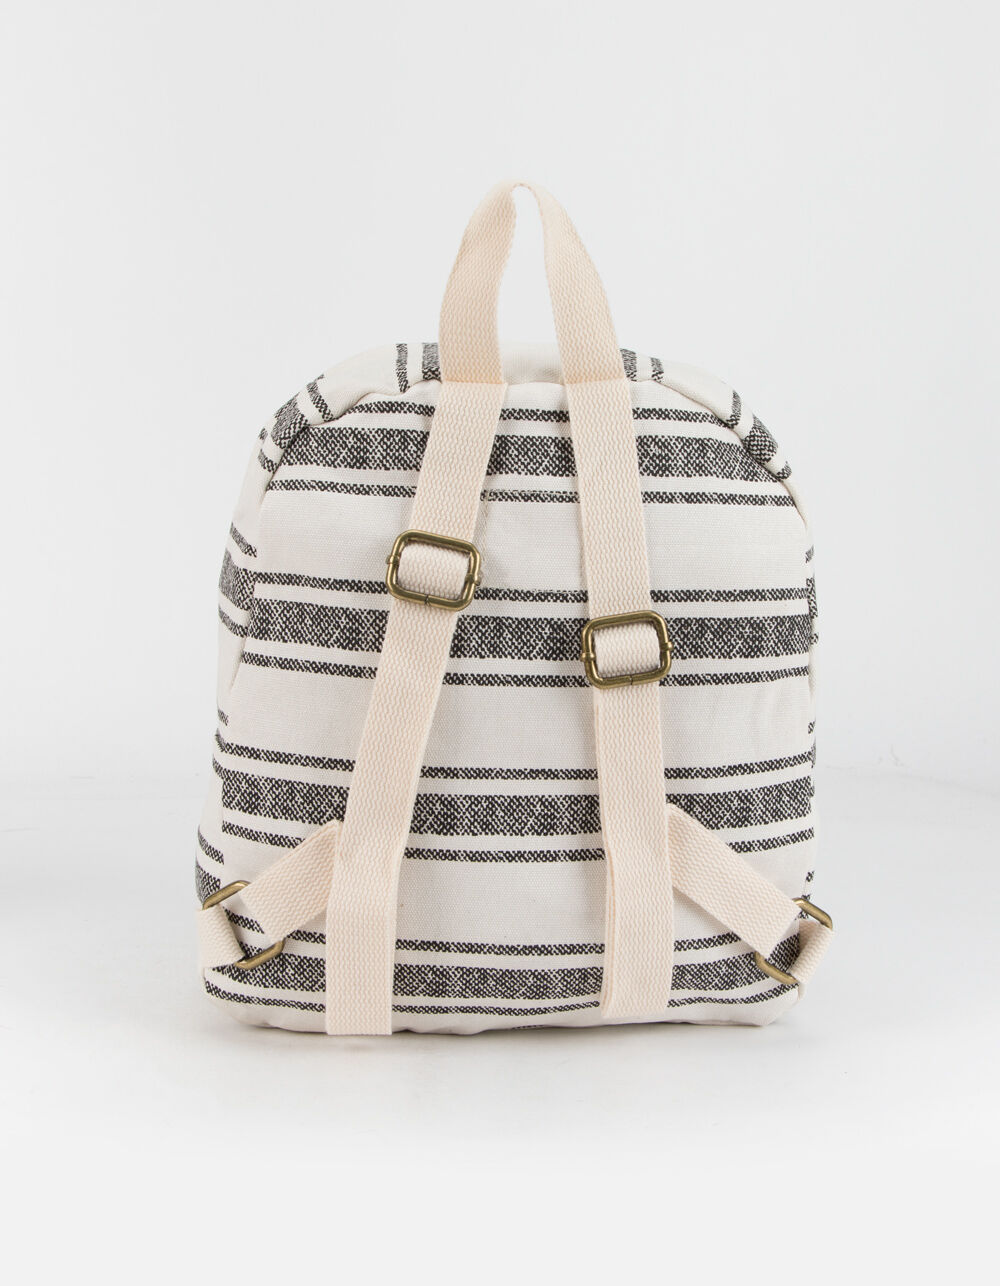 Billabong Mini Mama Denim Backpack - Women's Bags in Bright Indigo